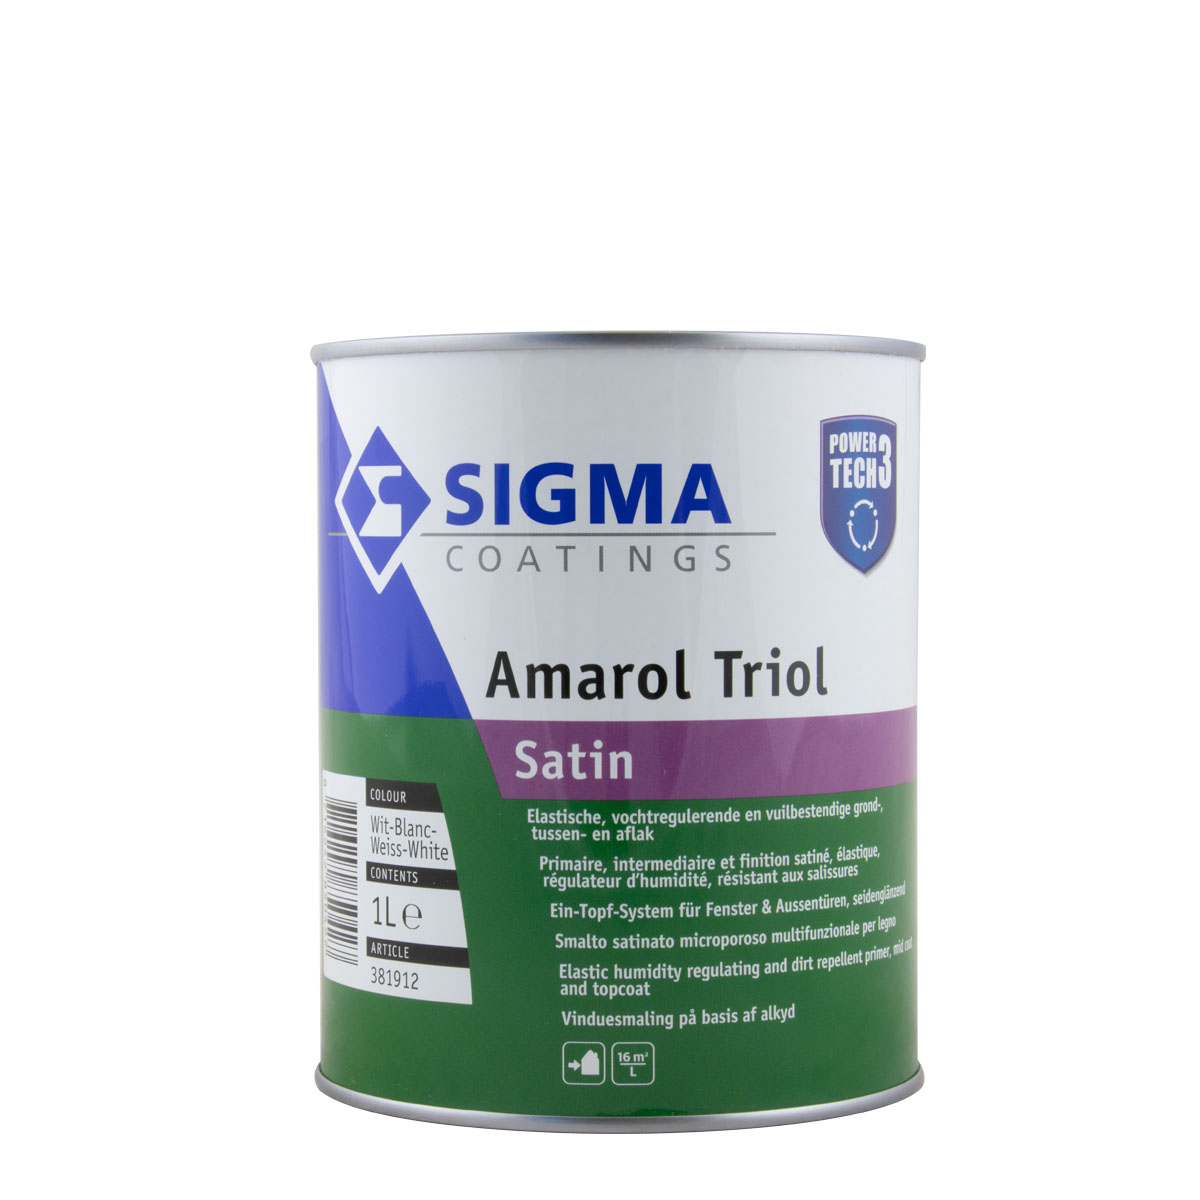 Sigma Amarol Triol Satin weiss 1L, seidenglänzend